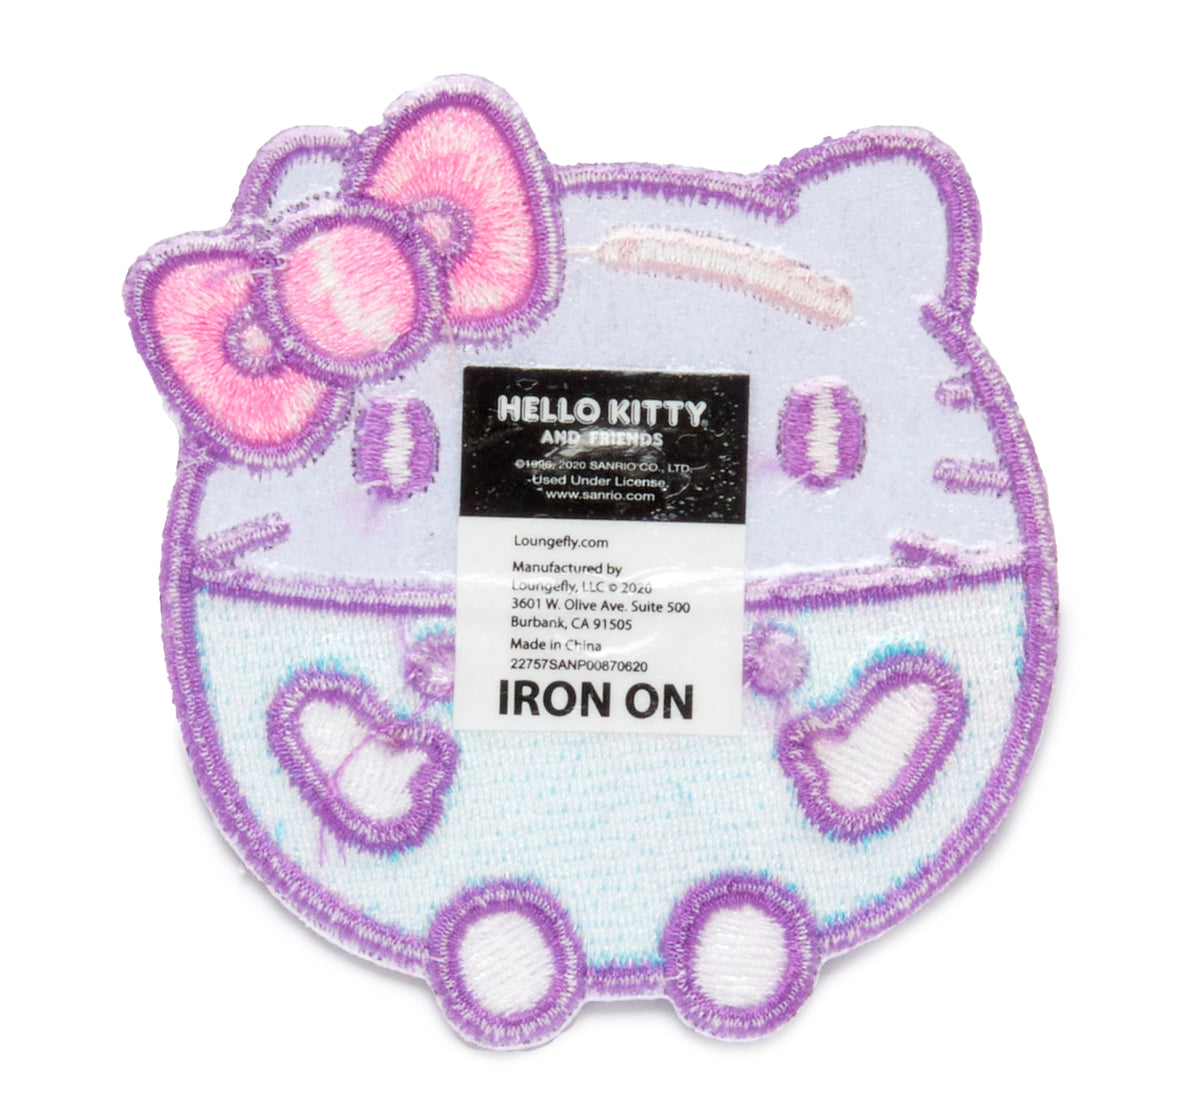 Hello kitty iron on patches - Creo Piece